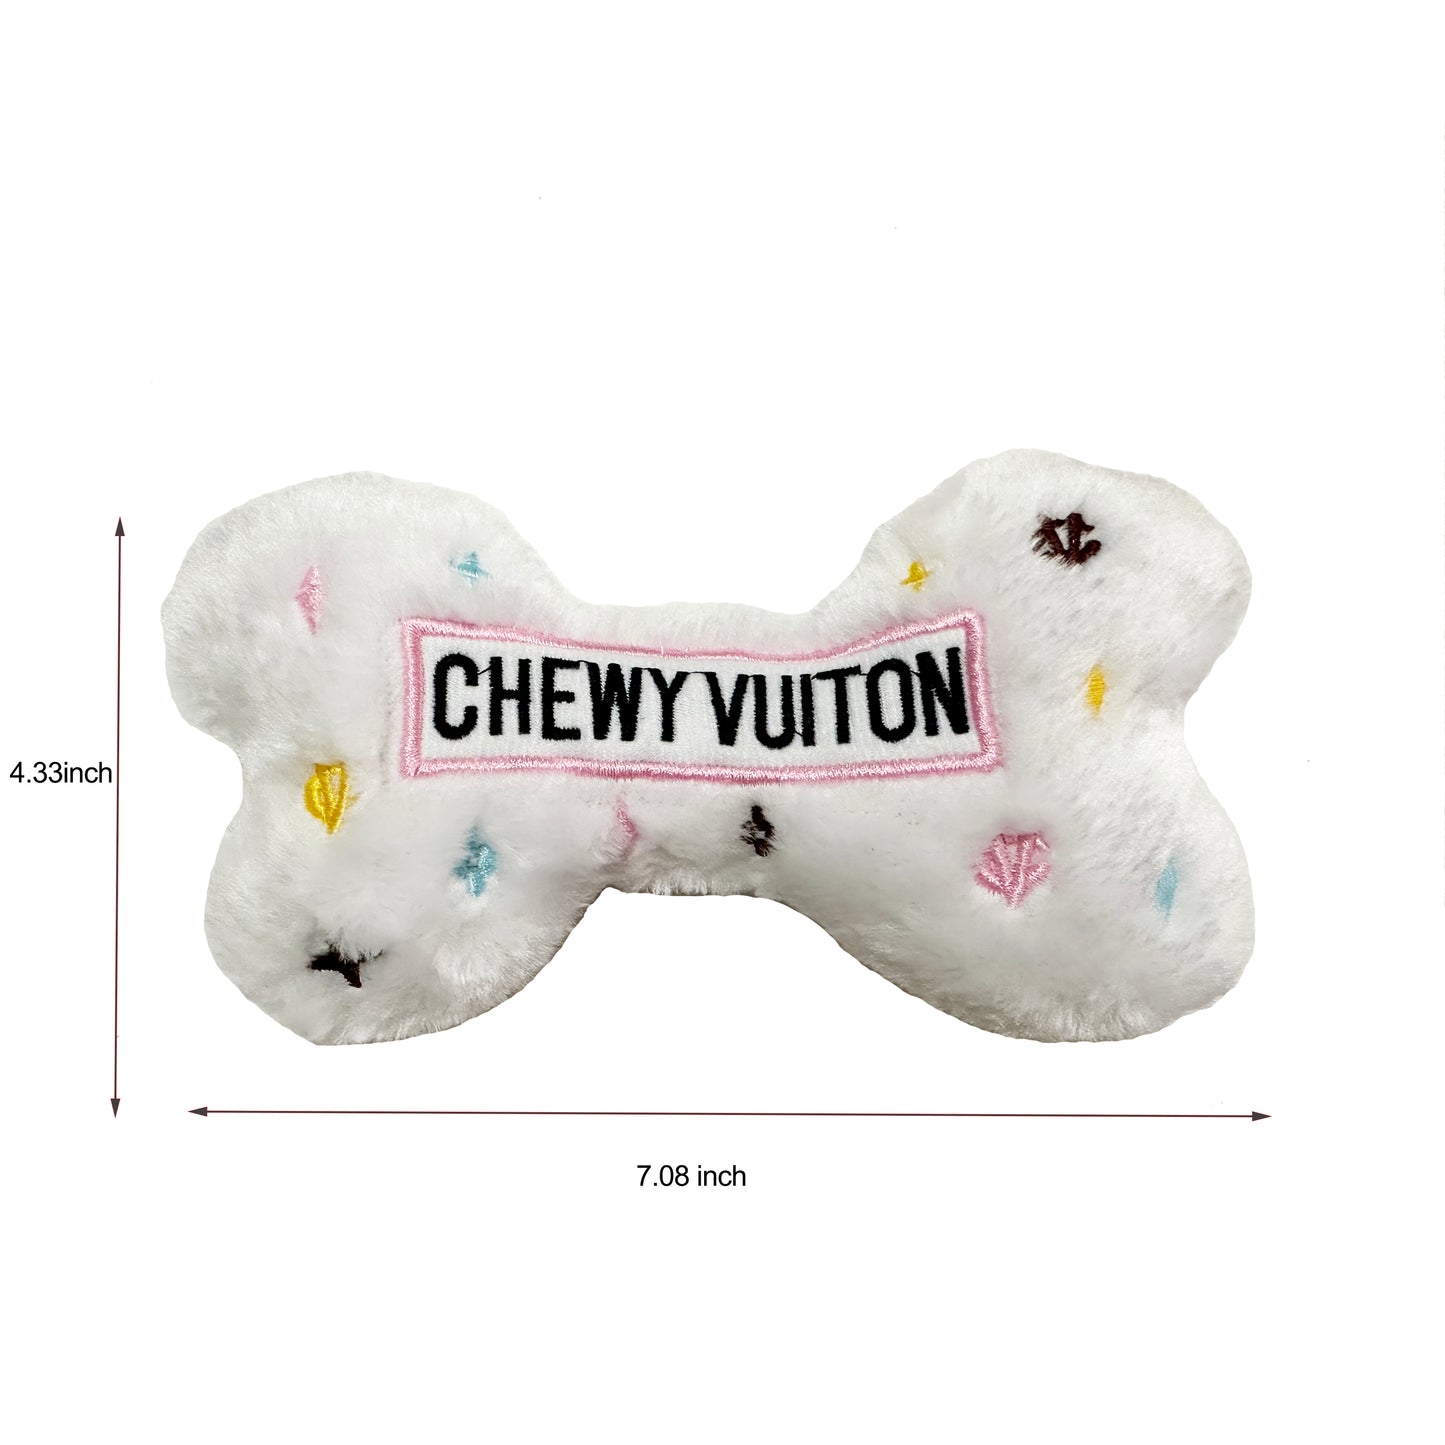 Chewy Vuiton White  Bone Toy